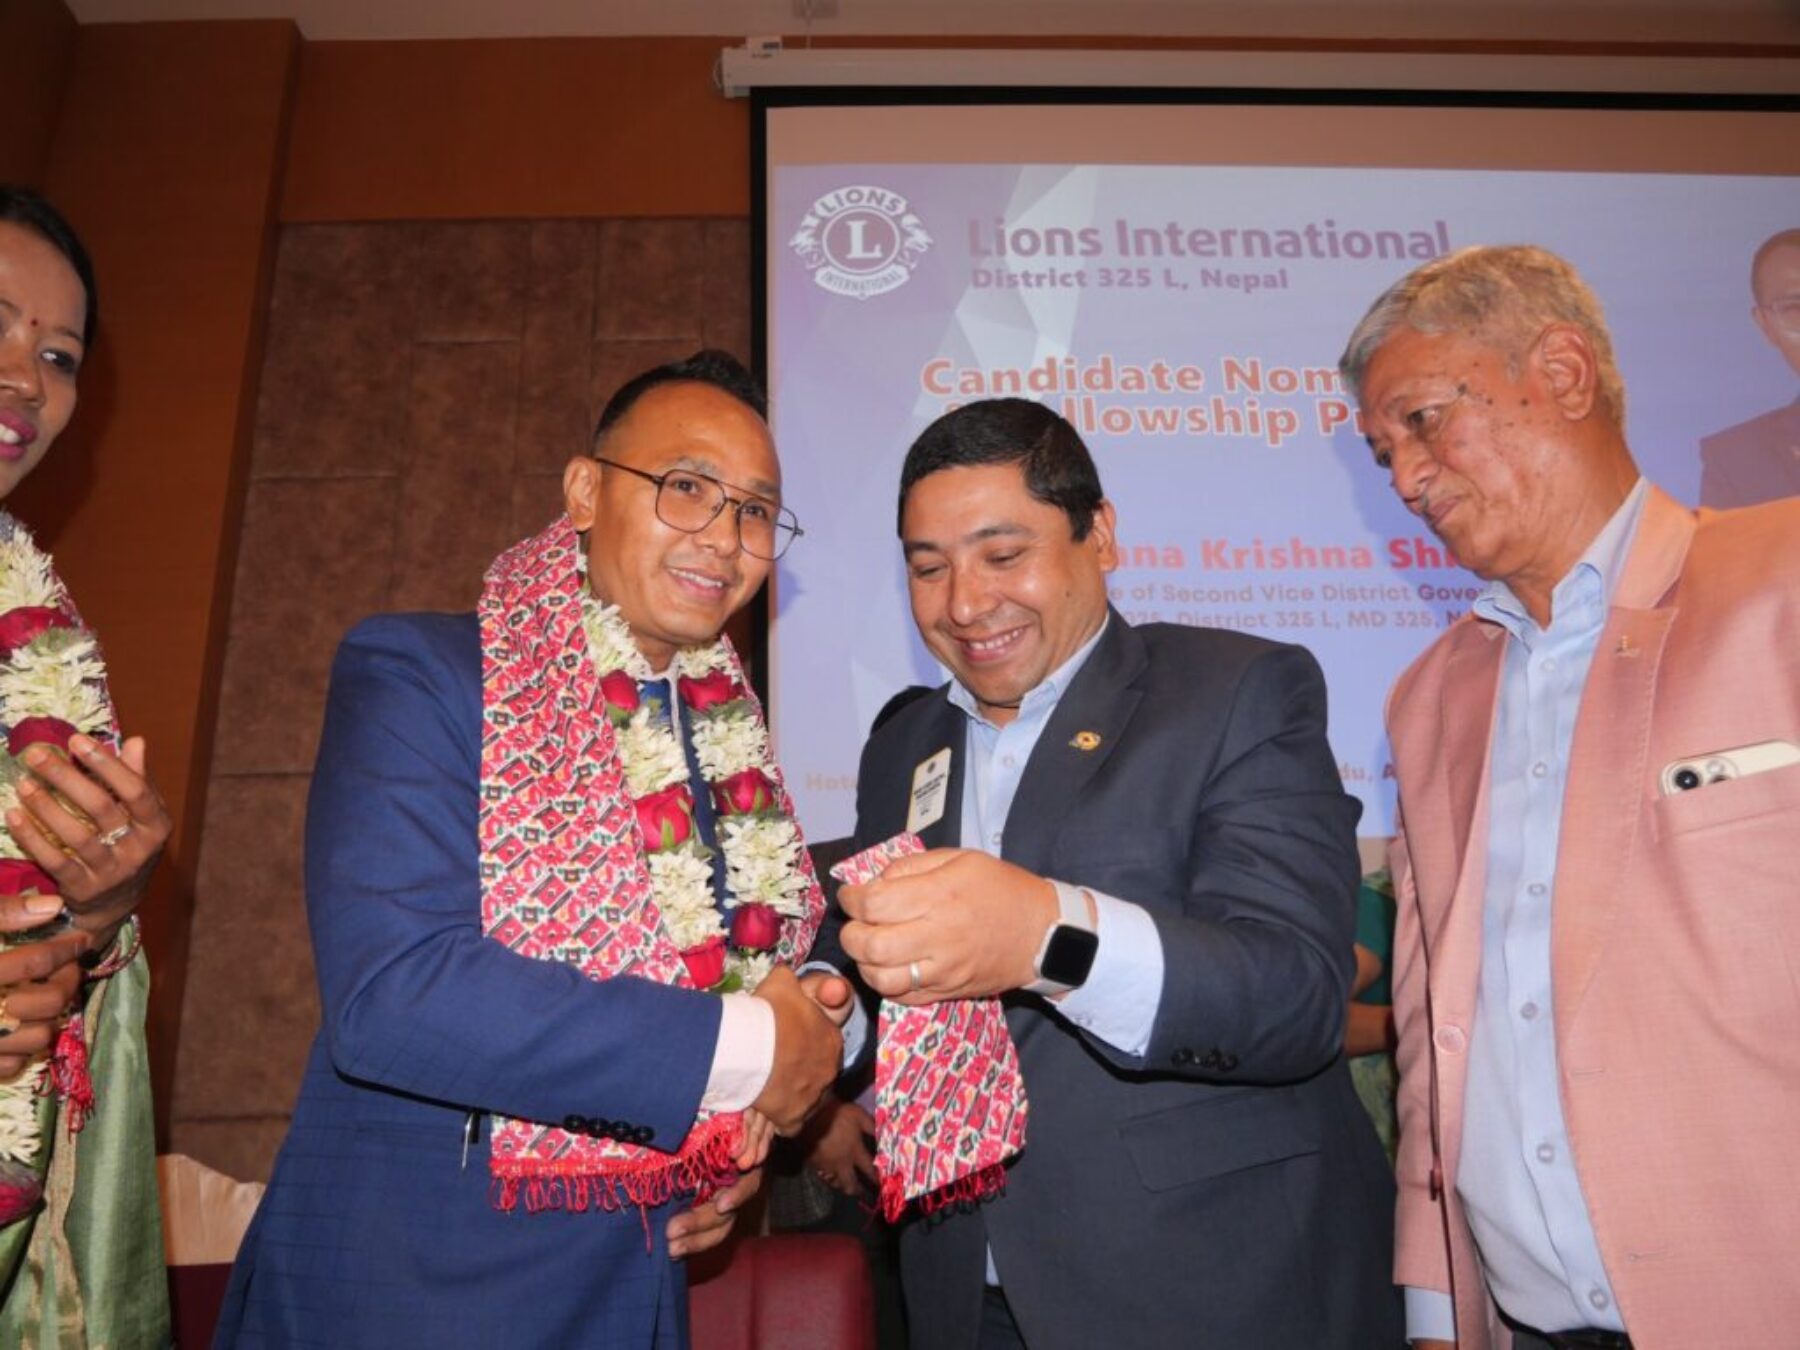 Nomination_Man Krishna Shrestha_LCI 325 L_2nd Vice Dostrict Governor (5)